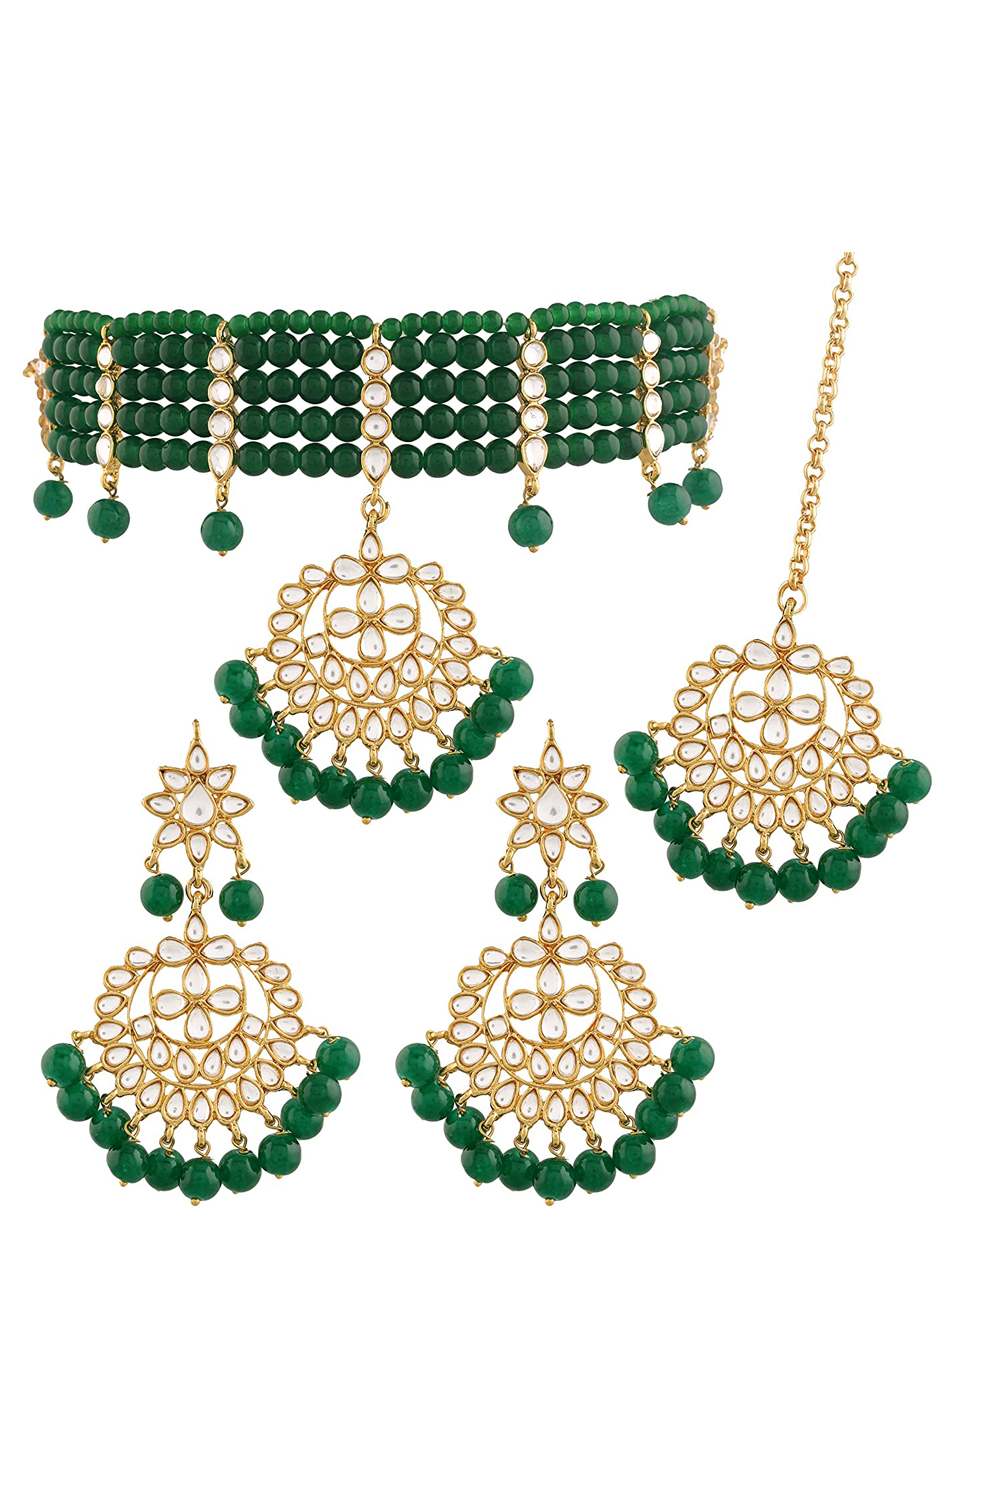 Buy Women's Alloy Necklace Set in Green